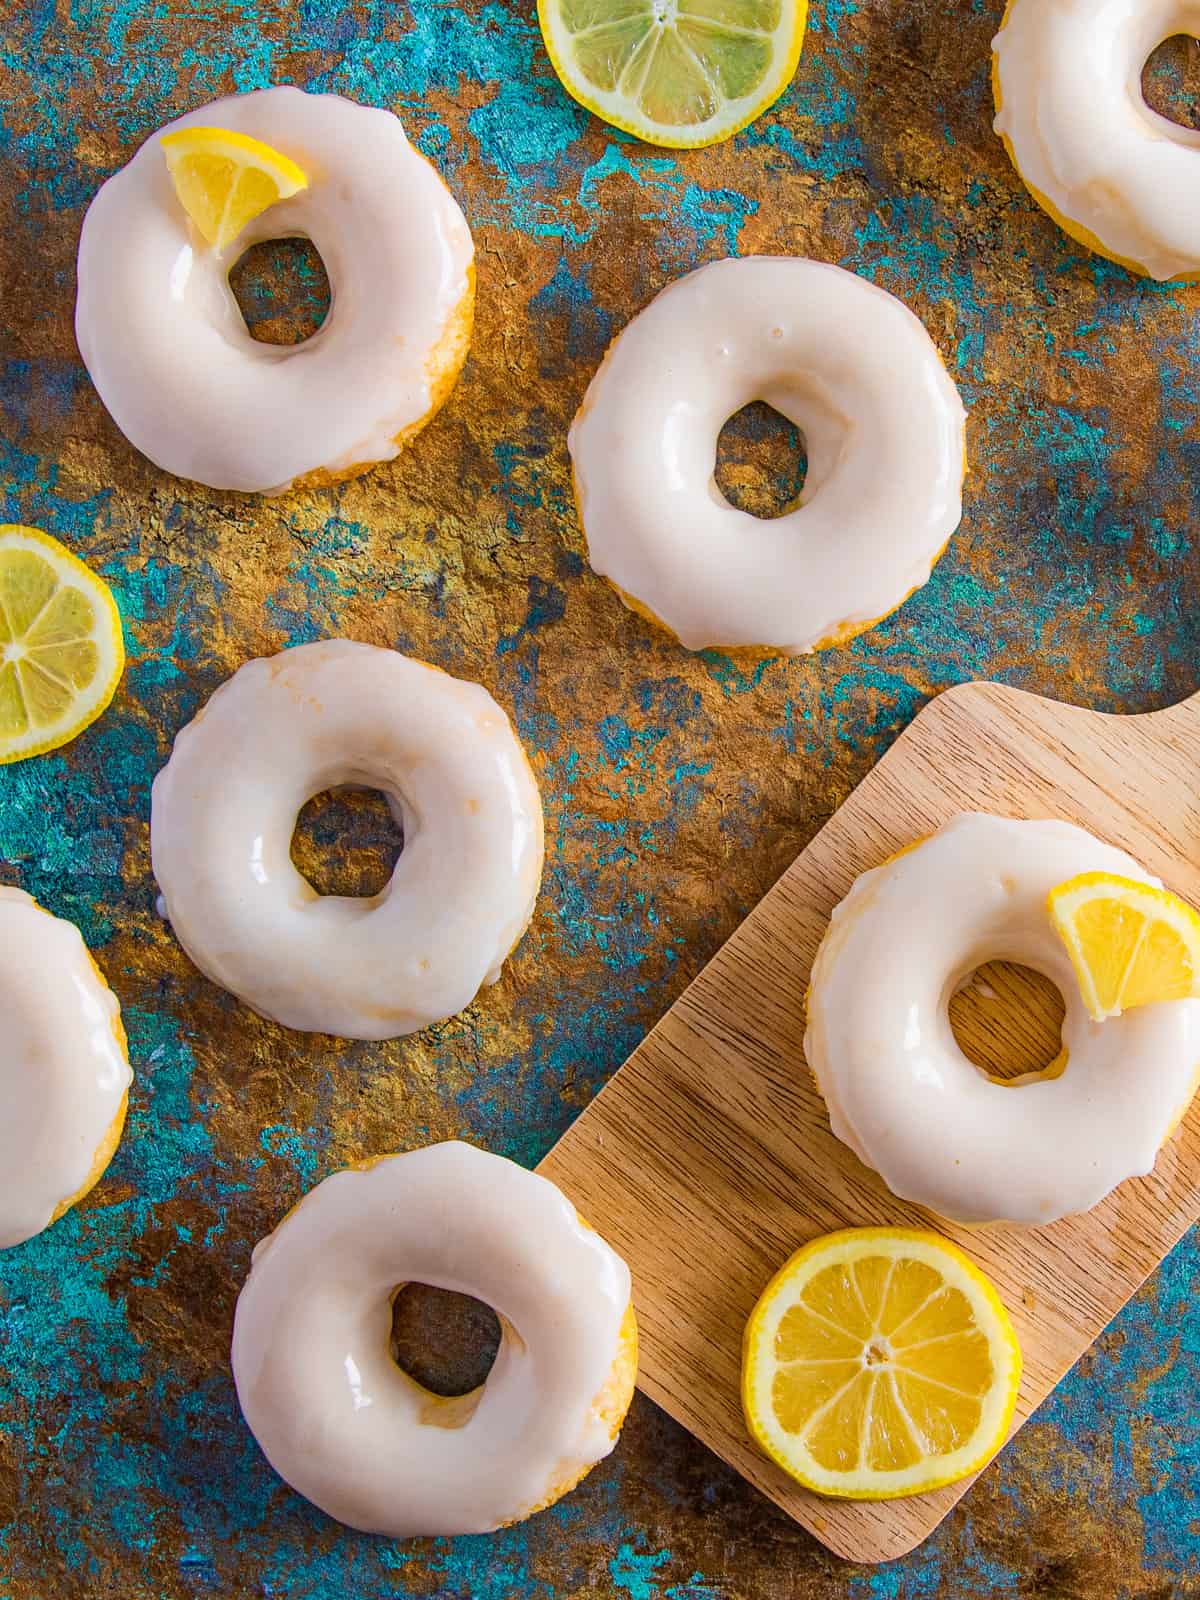 Lemon glazed donuts with slices of lemons